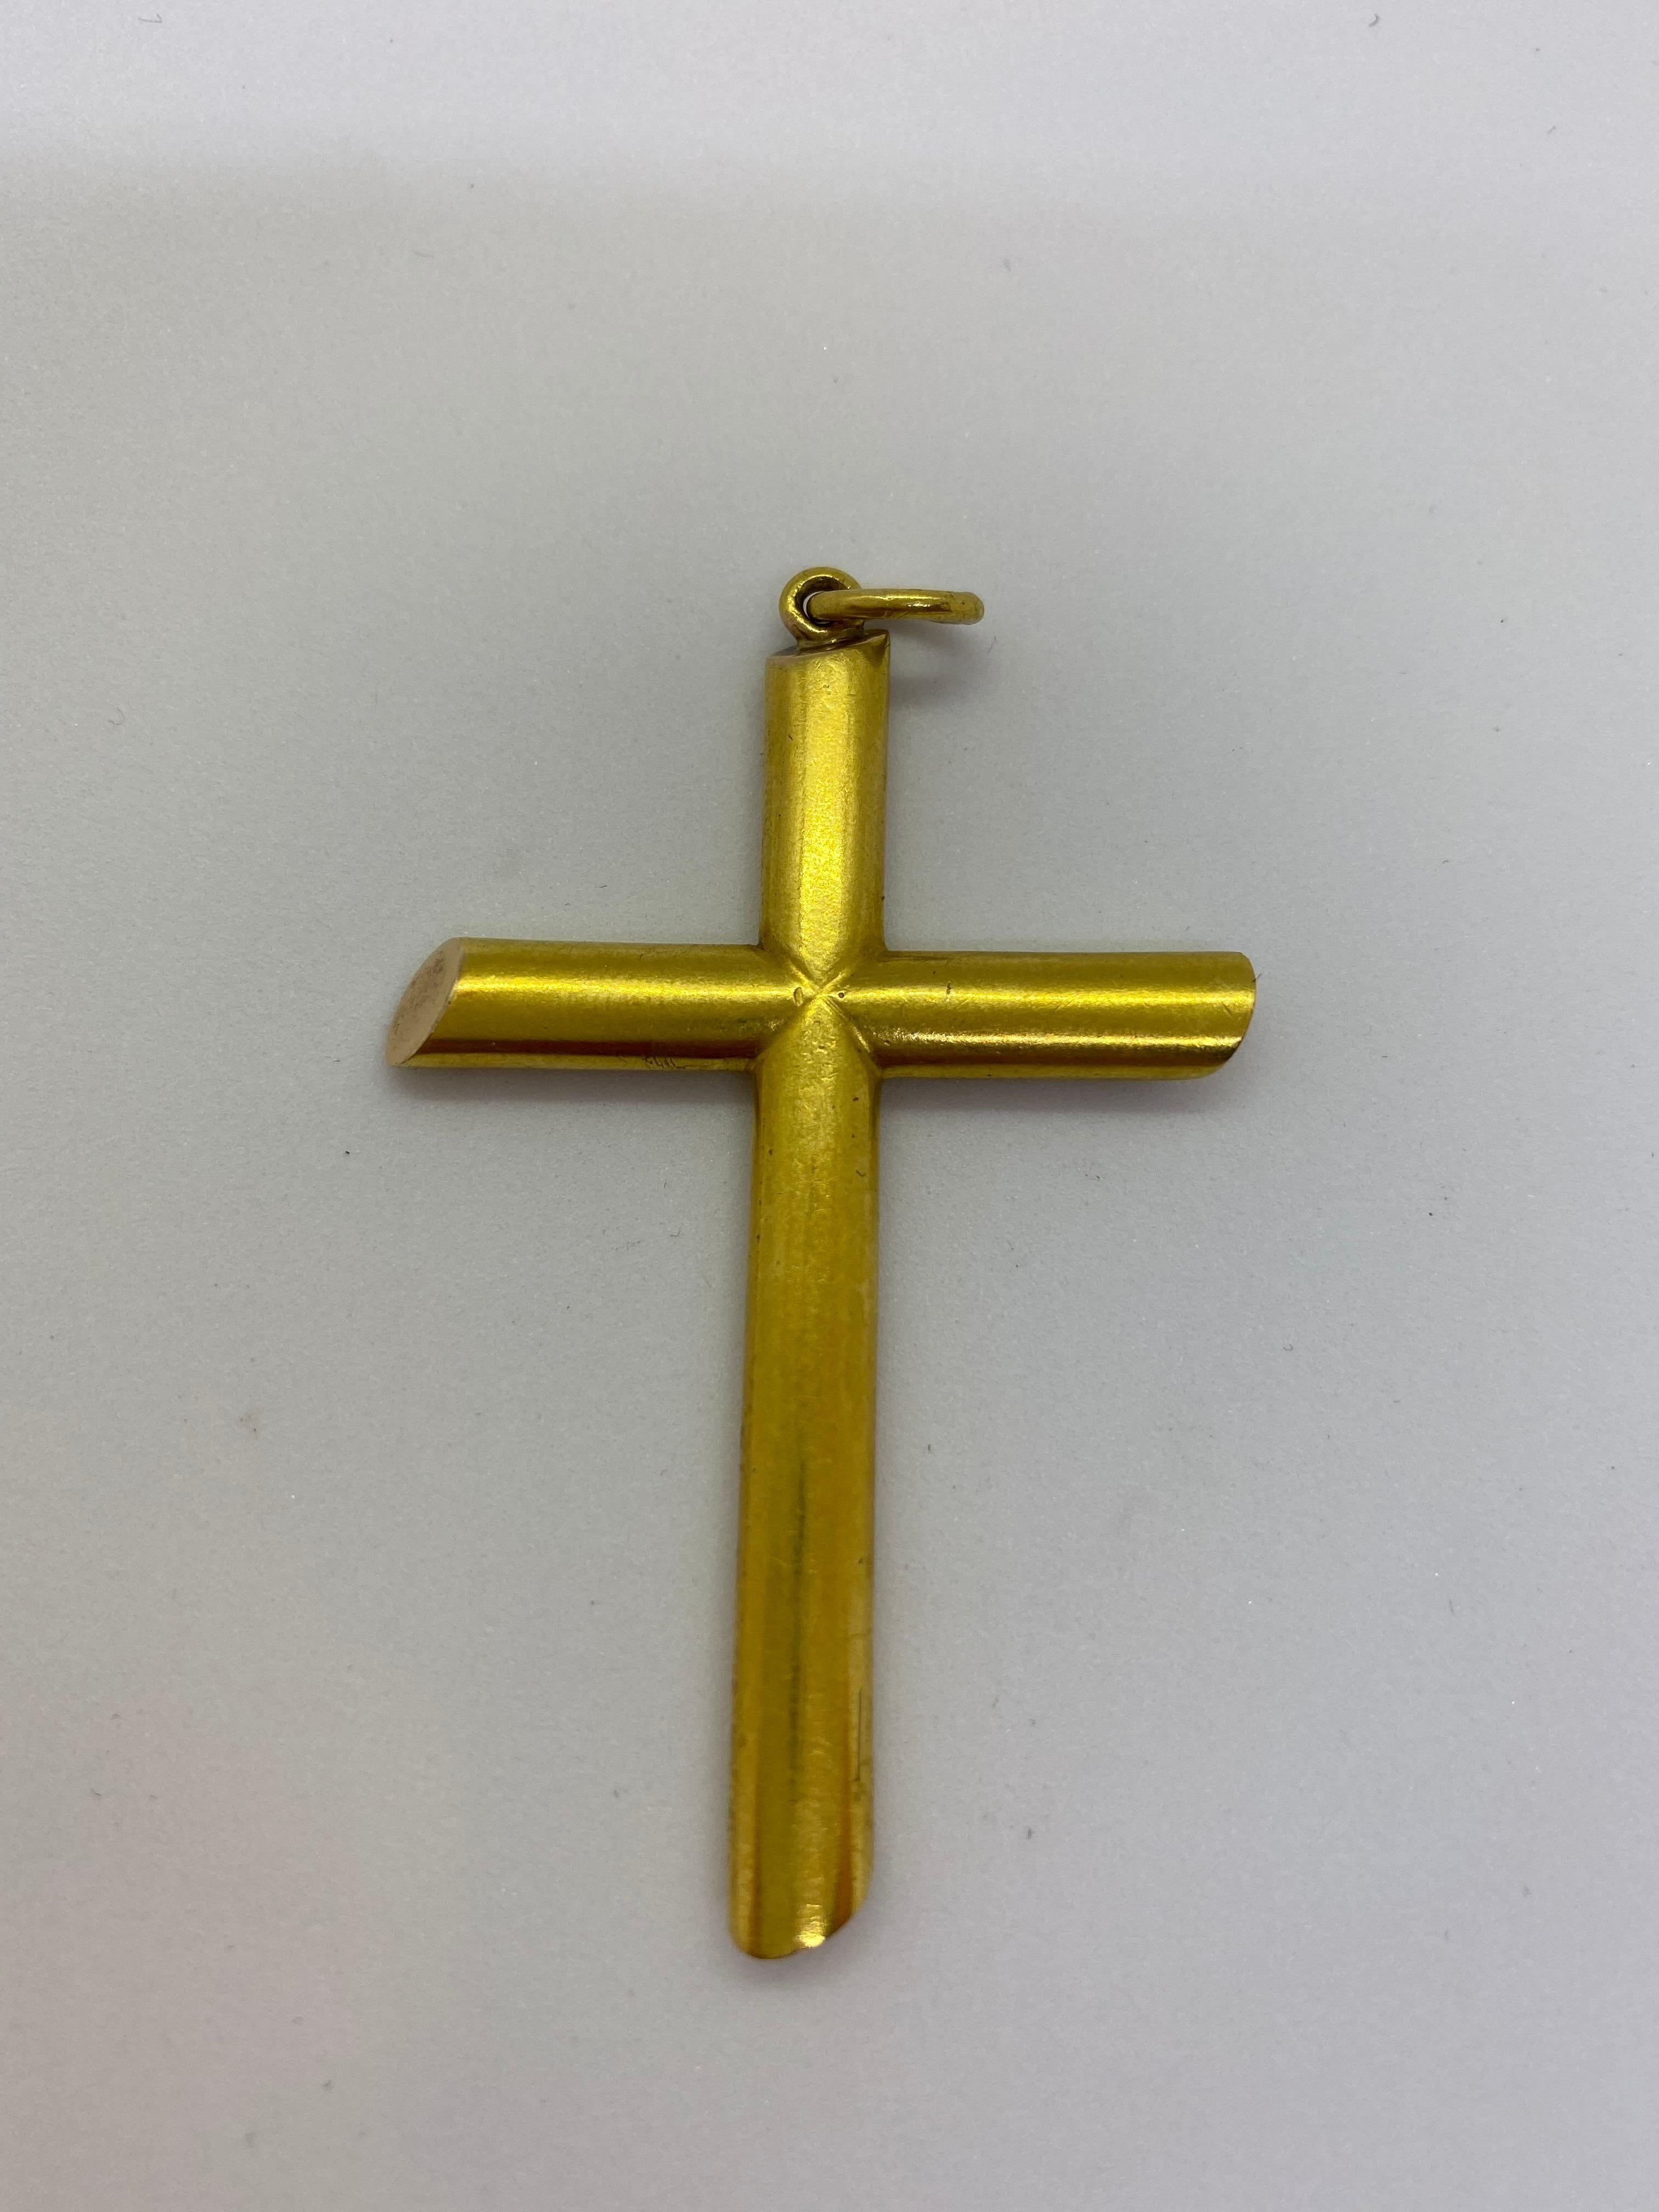 14 Karat Yellow Gold Russia Cross Pendant
Possibly Nikolayevich Lyapunov
14k, Saint Petersburg gold stamp 56
Width 3.8cm, Lenght 6.0cm, Depth 0.4cm